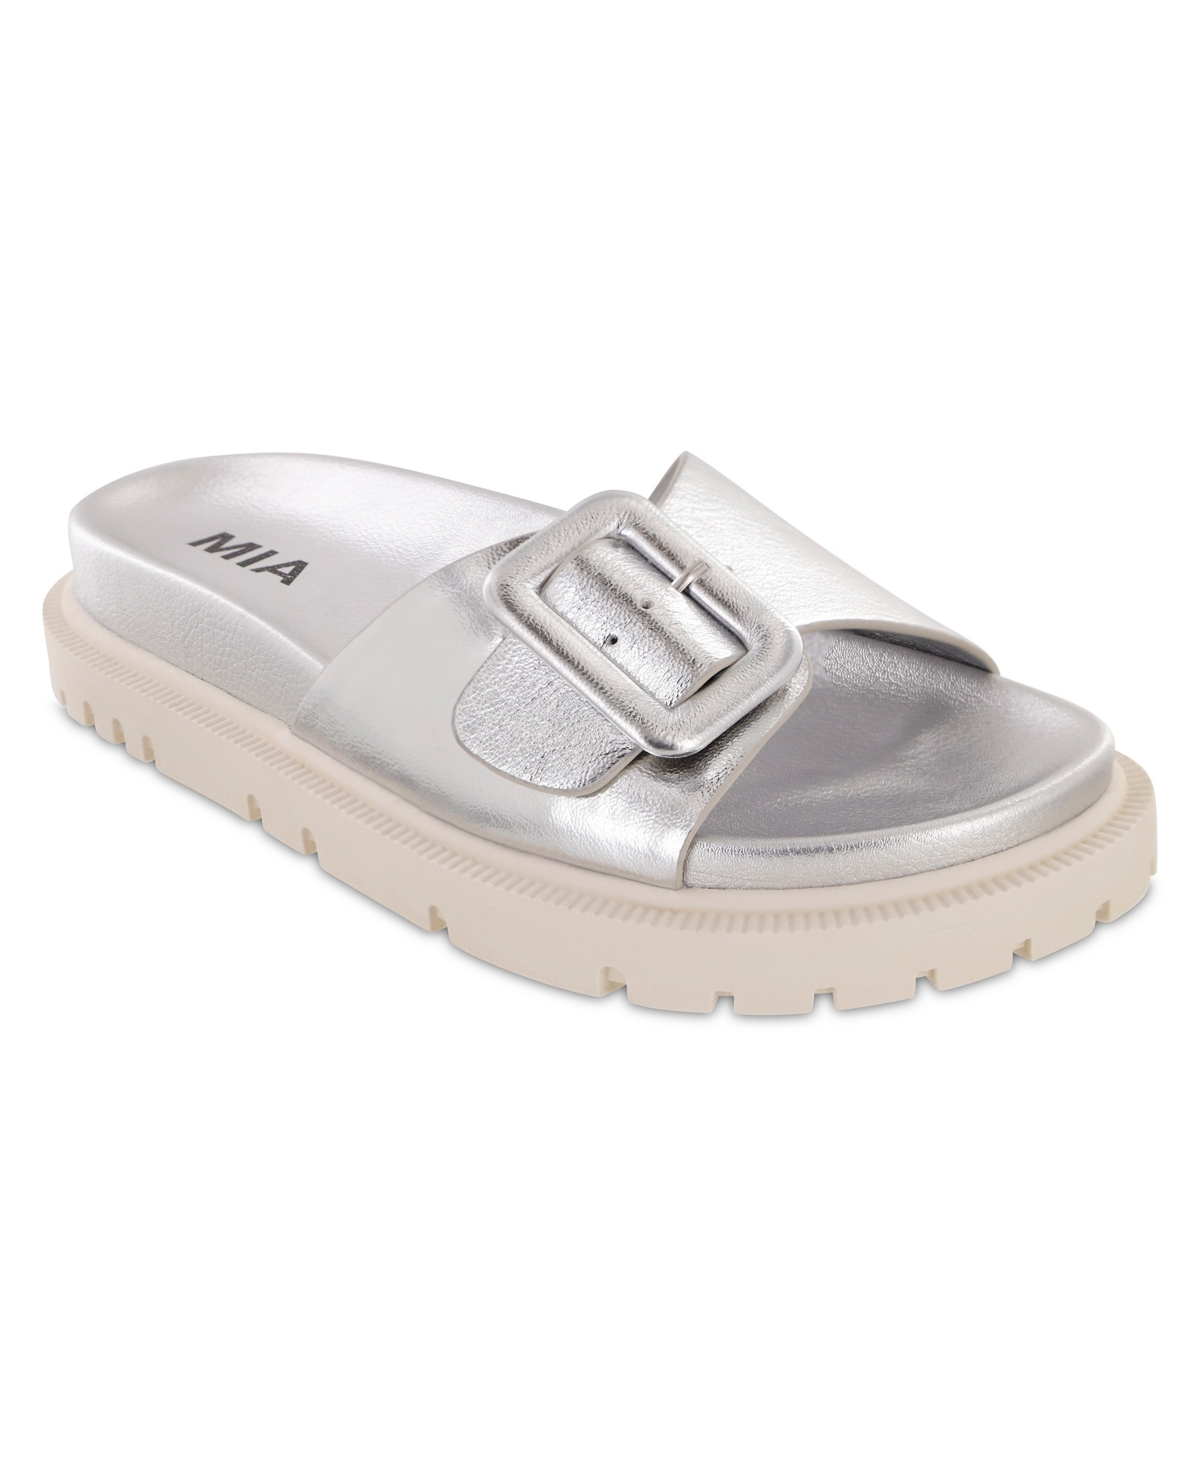 Women's Gya Slip-On Flat Sandals - Silver